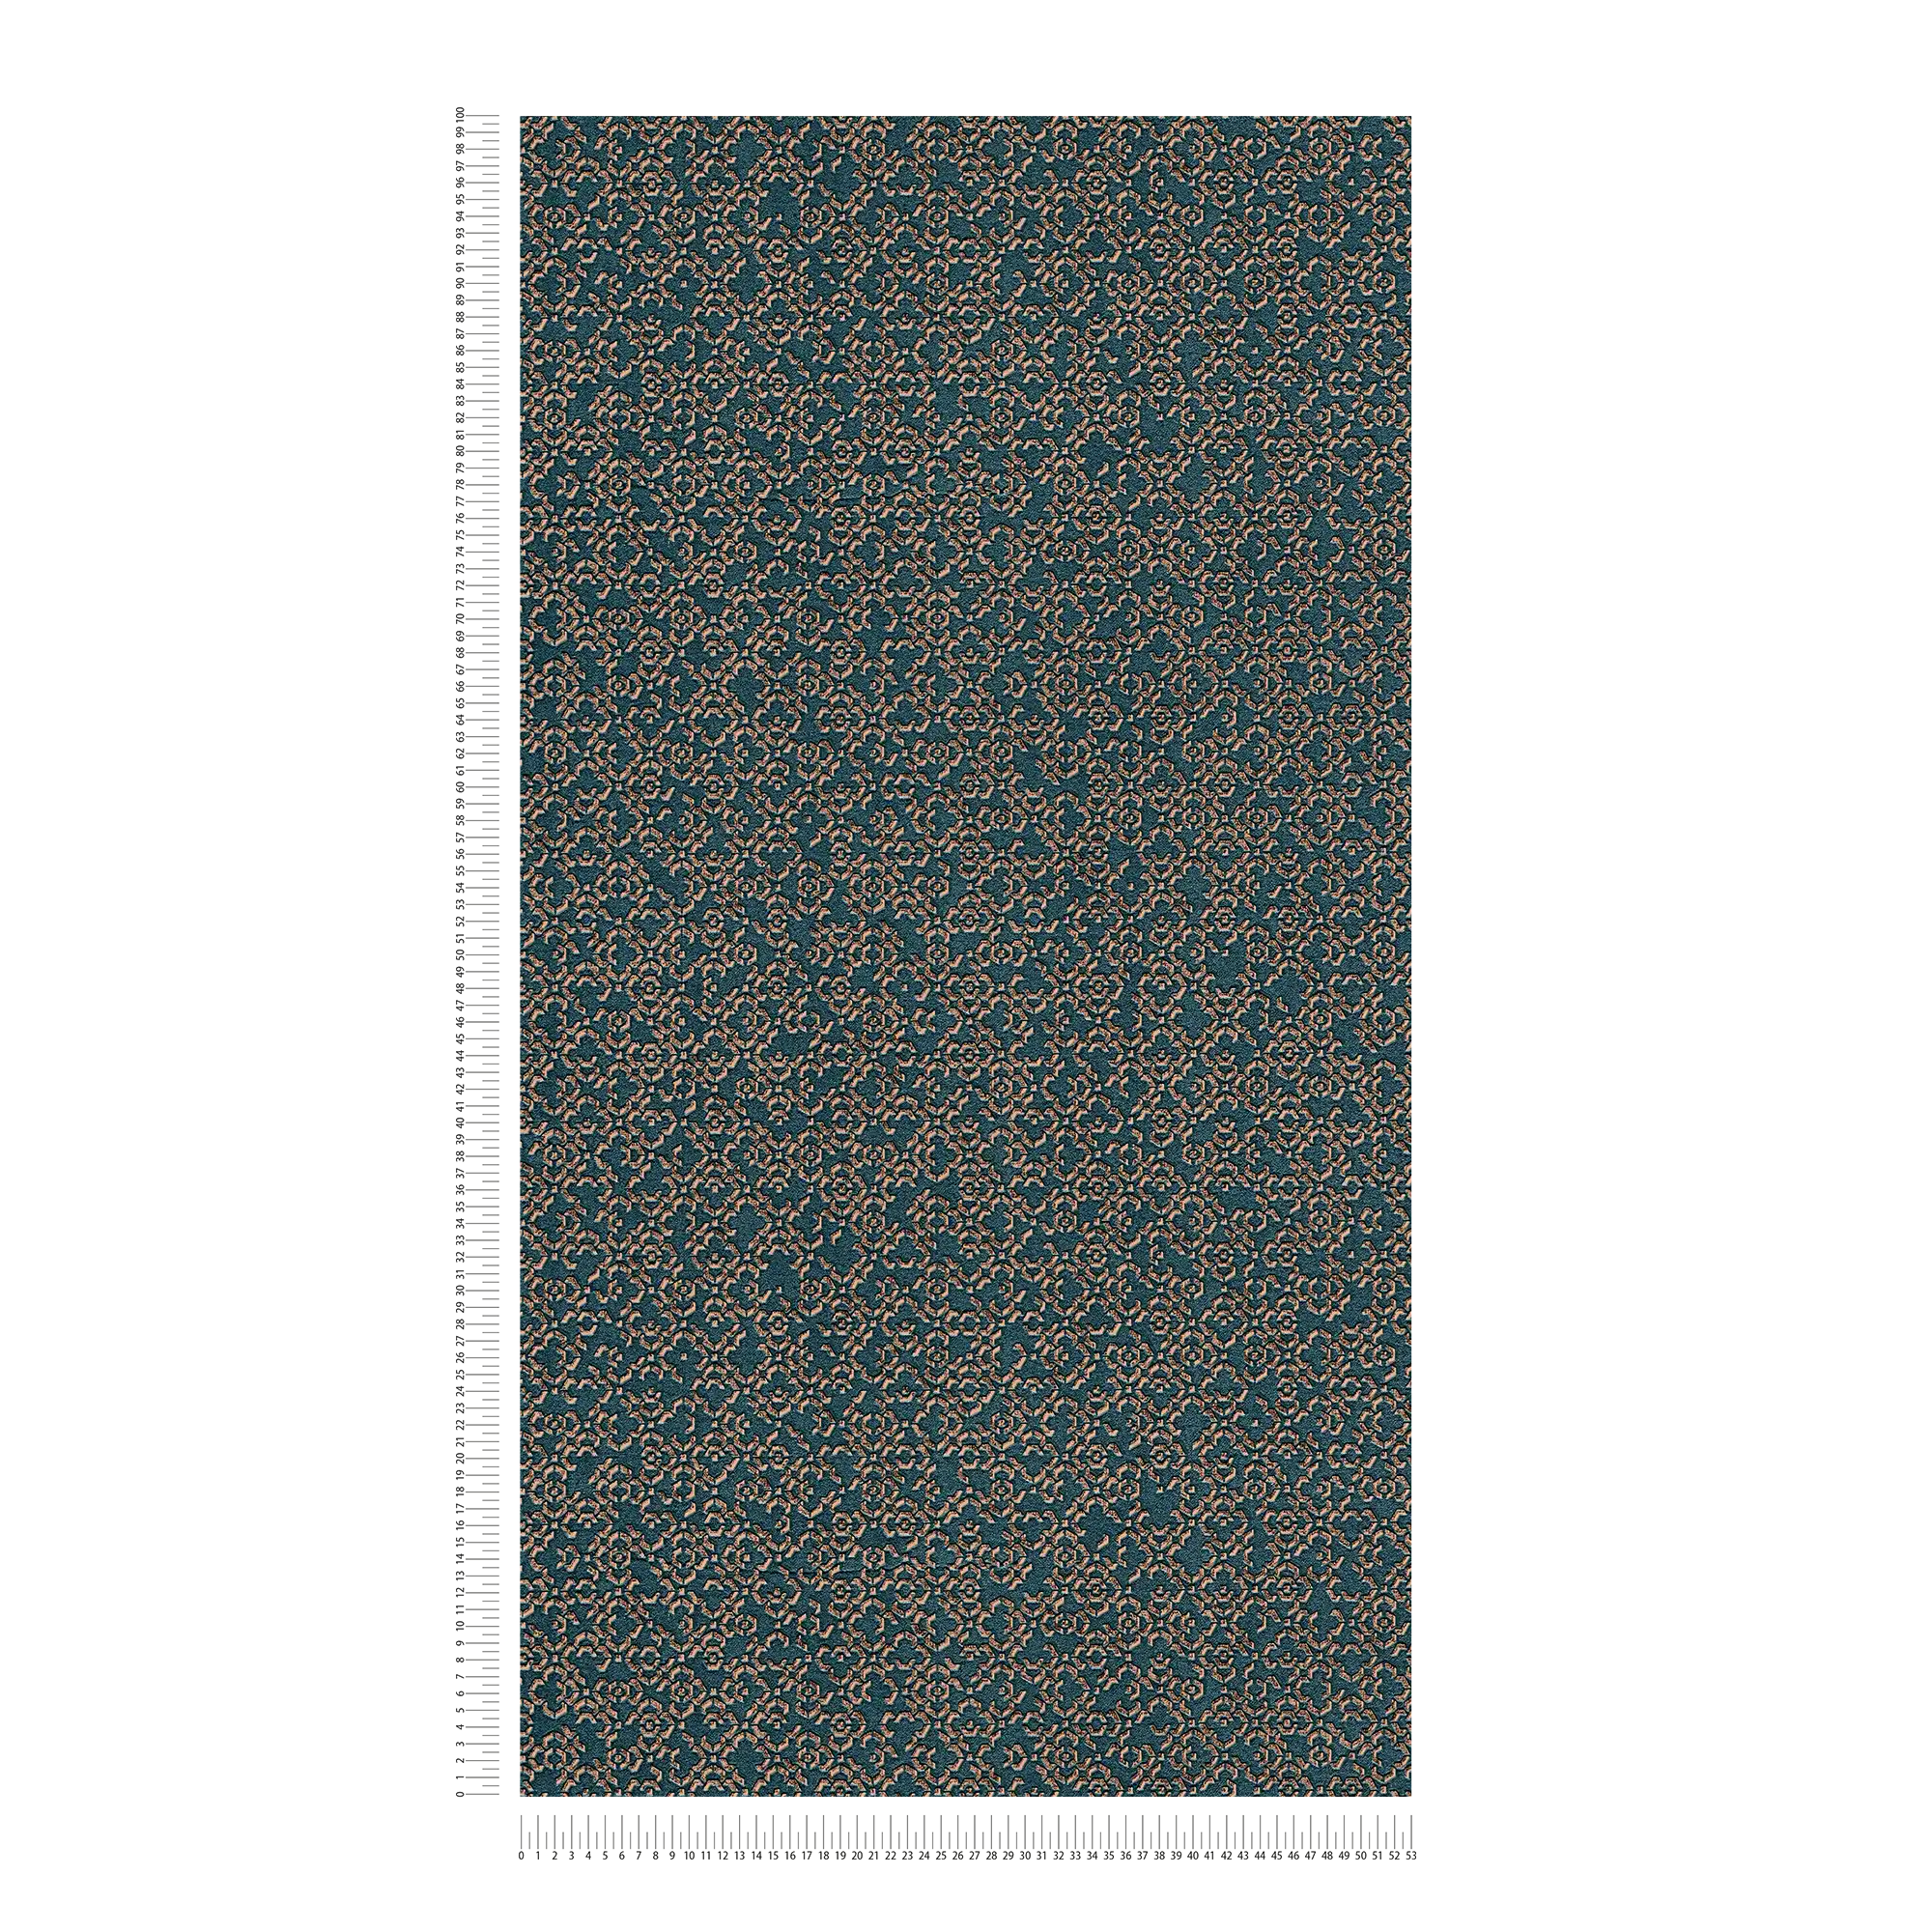             3D pattern wallpaper with metallic effect - blue, grey, metallic
        